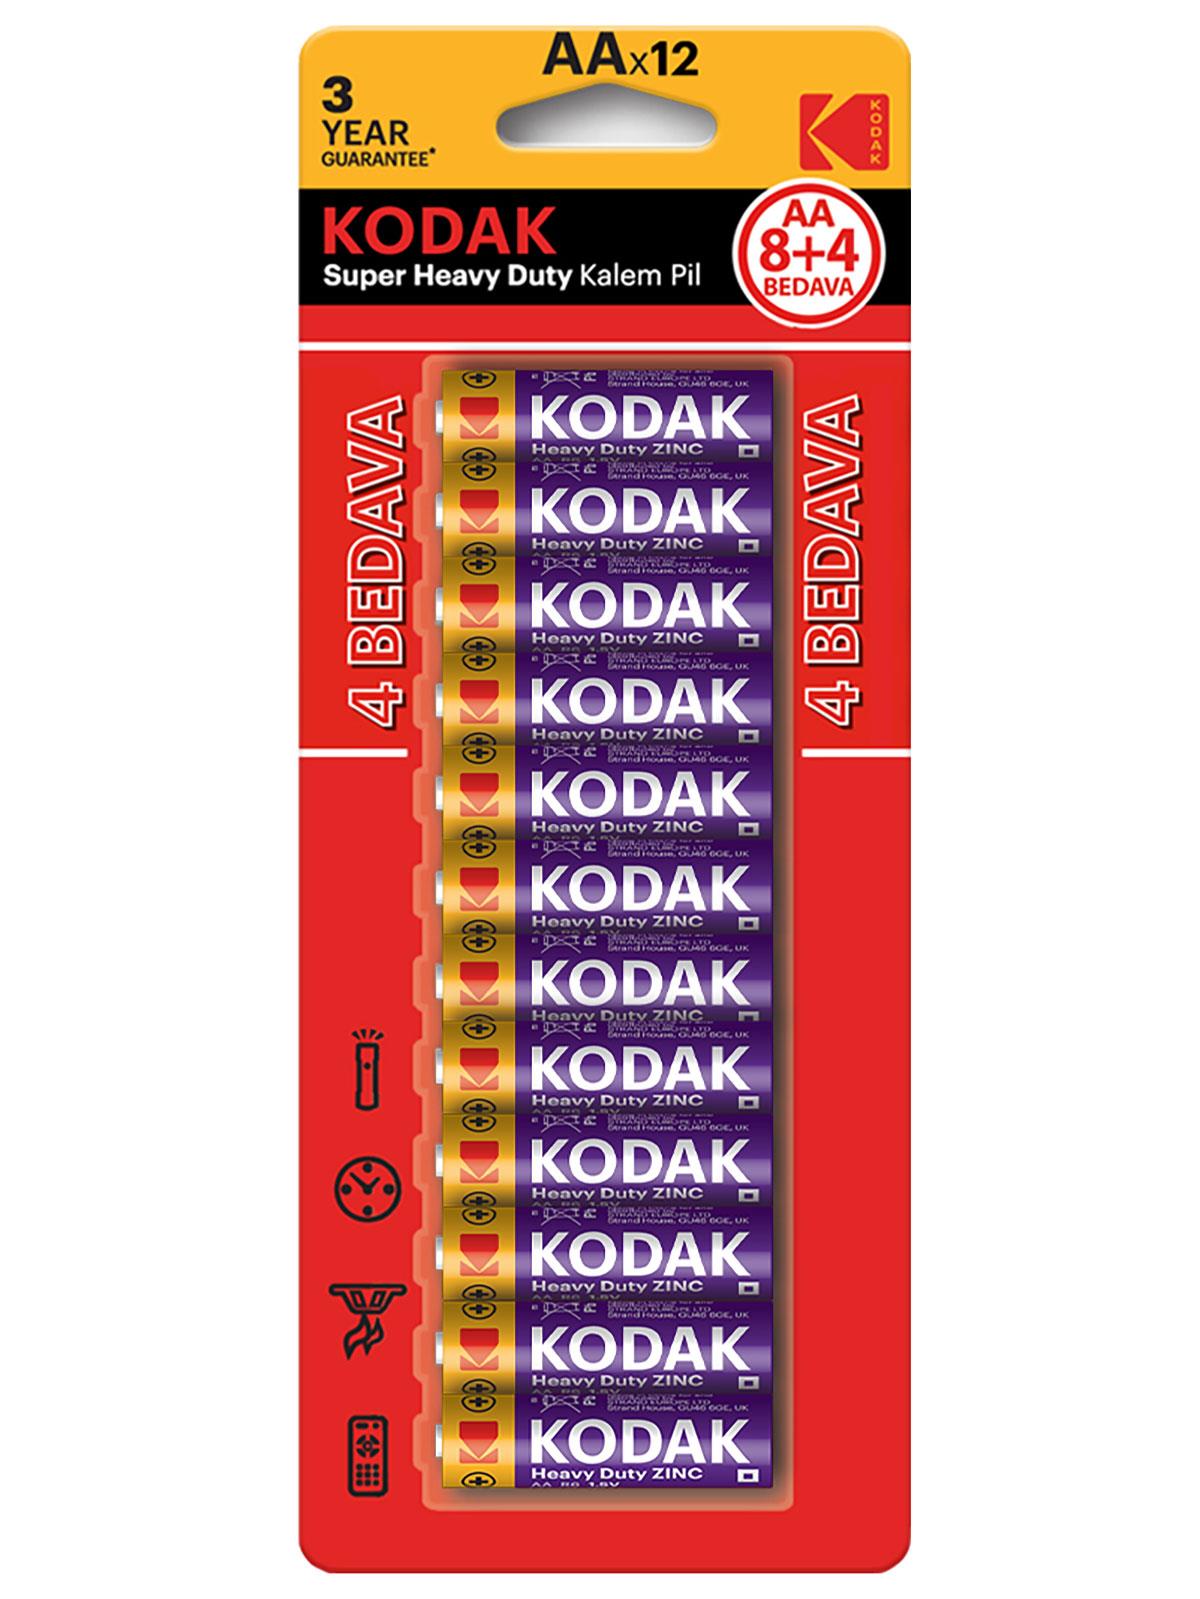 Kodak Heavy Duty Zinc AAA 1.5V 8+4 İnce Pil